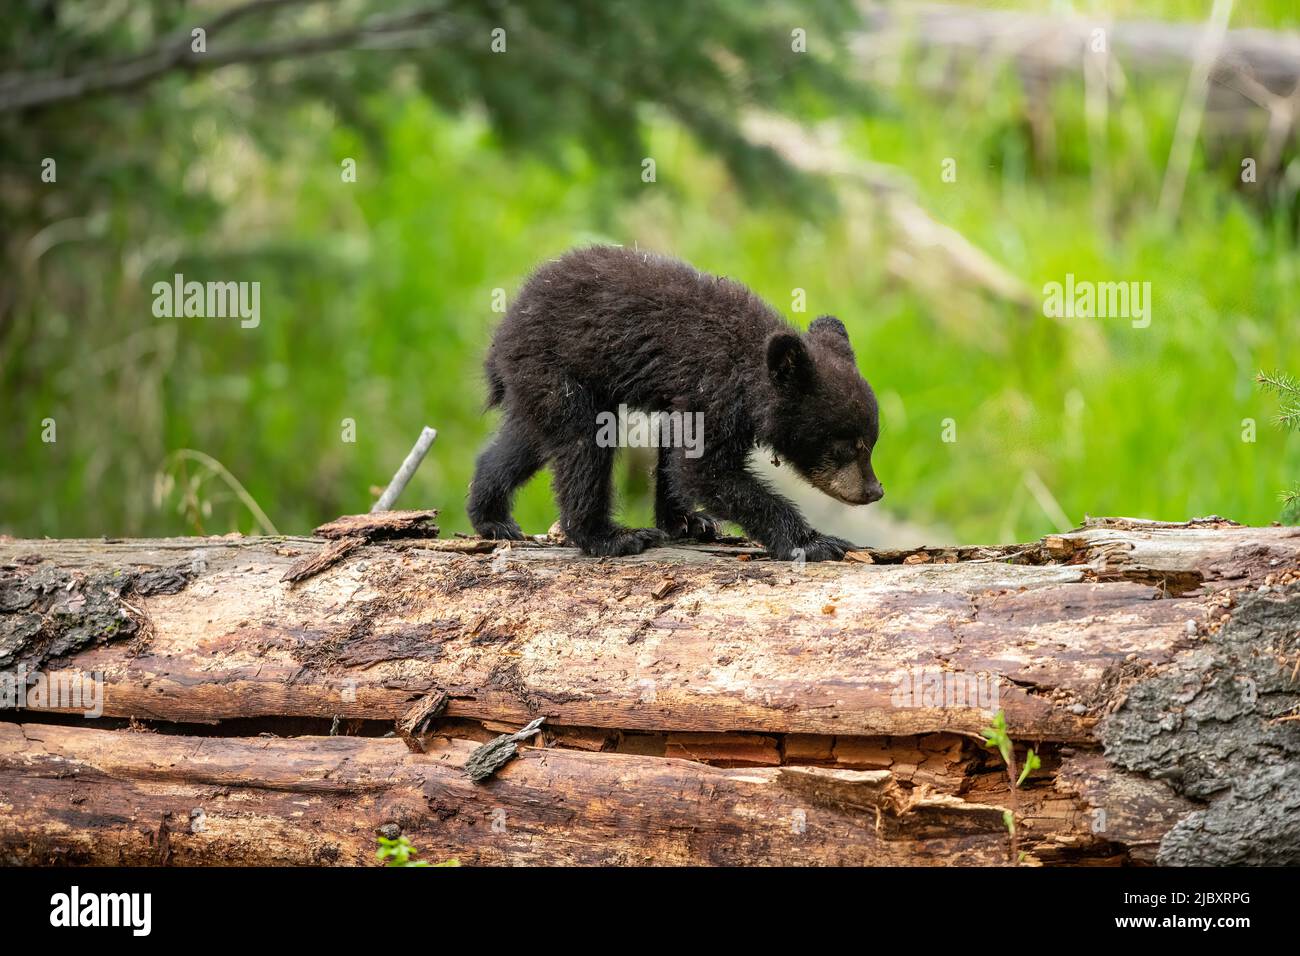 Black bear cub on log, Yellowstone Stock Photo